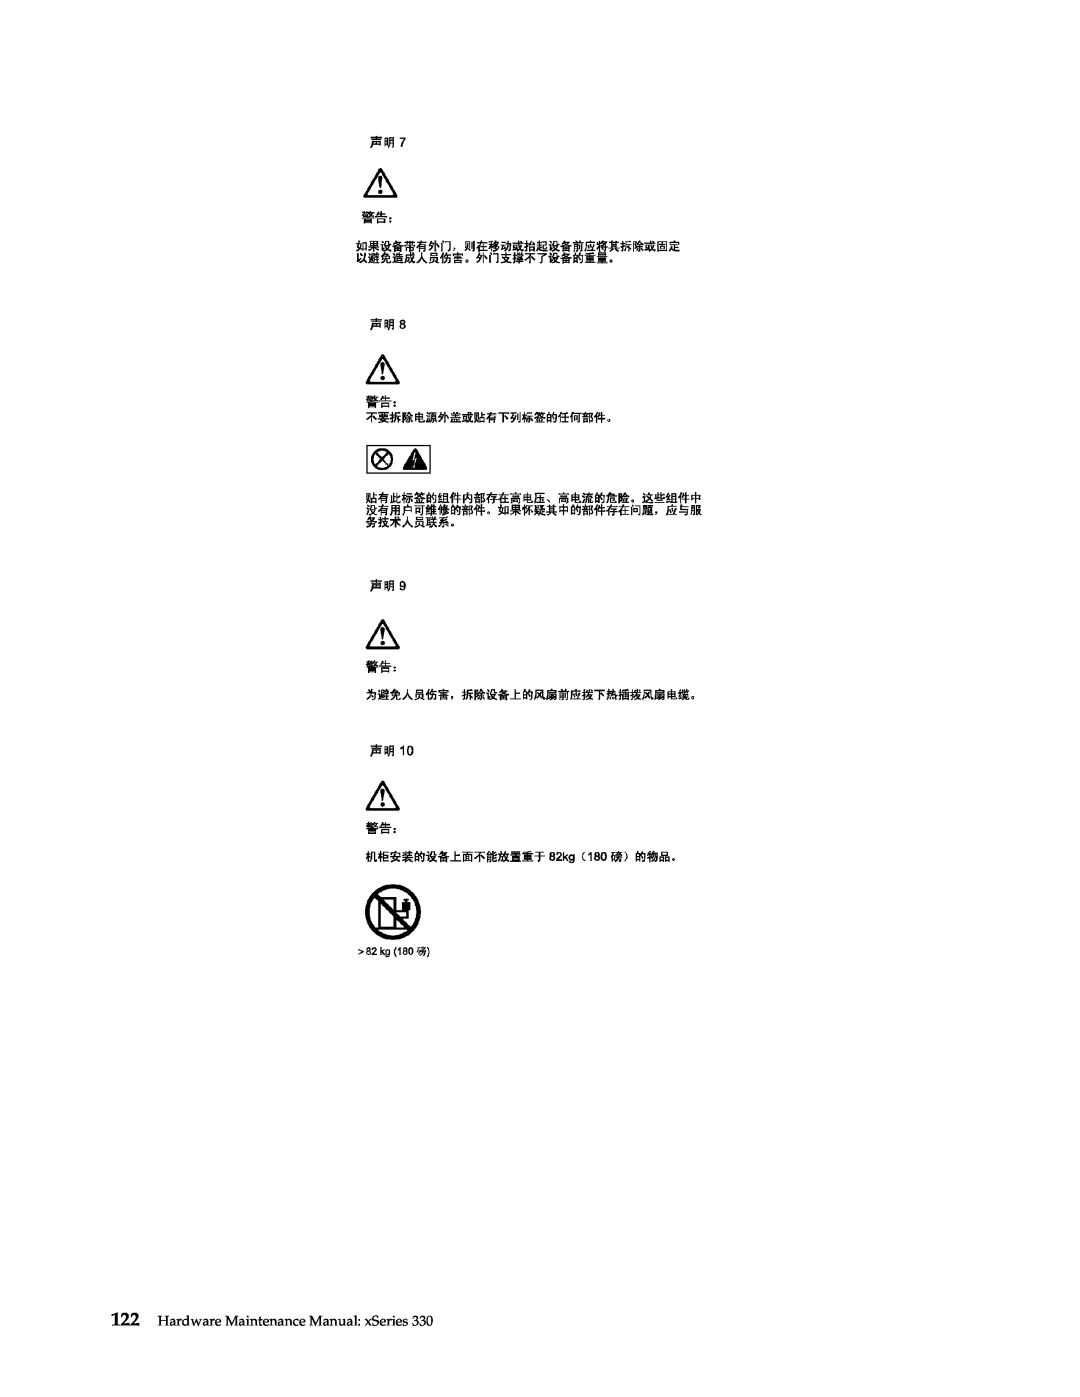 IBM xSeries 330 manual Hardware Maintenance Manual: xSeries 